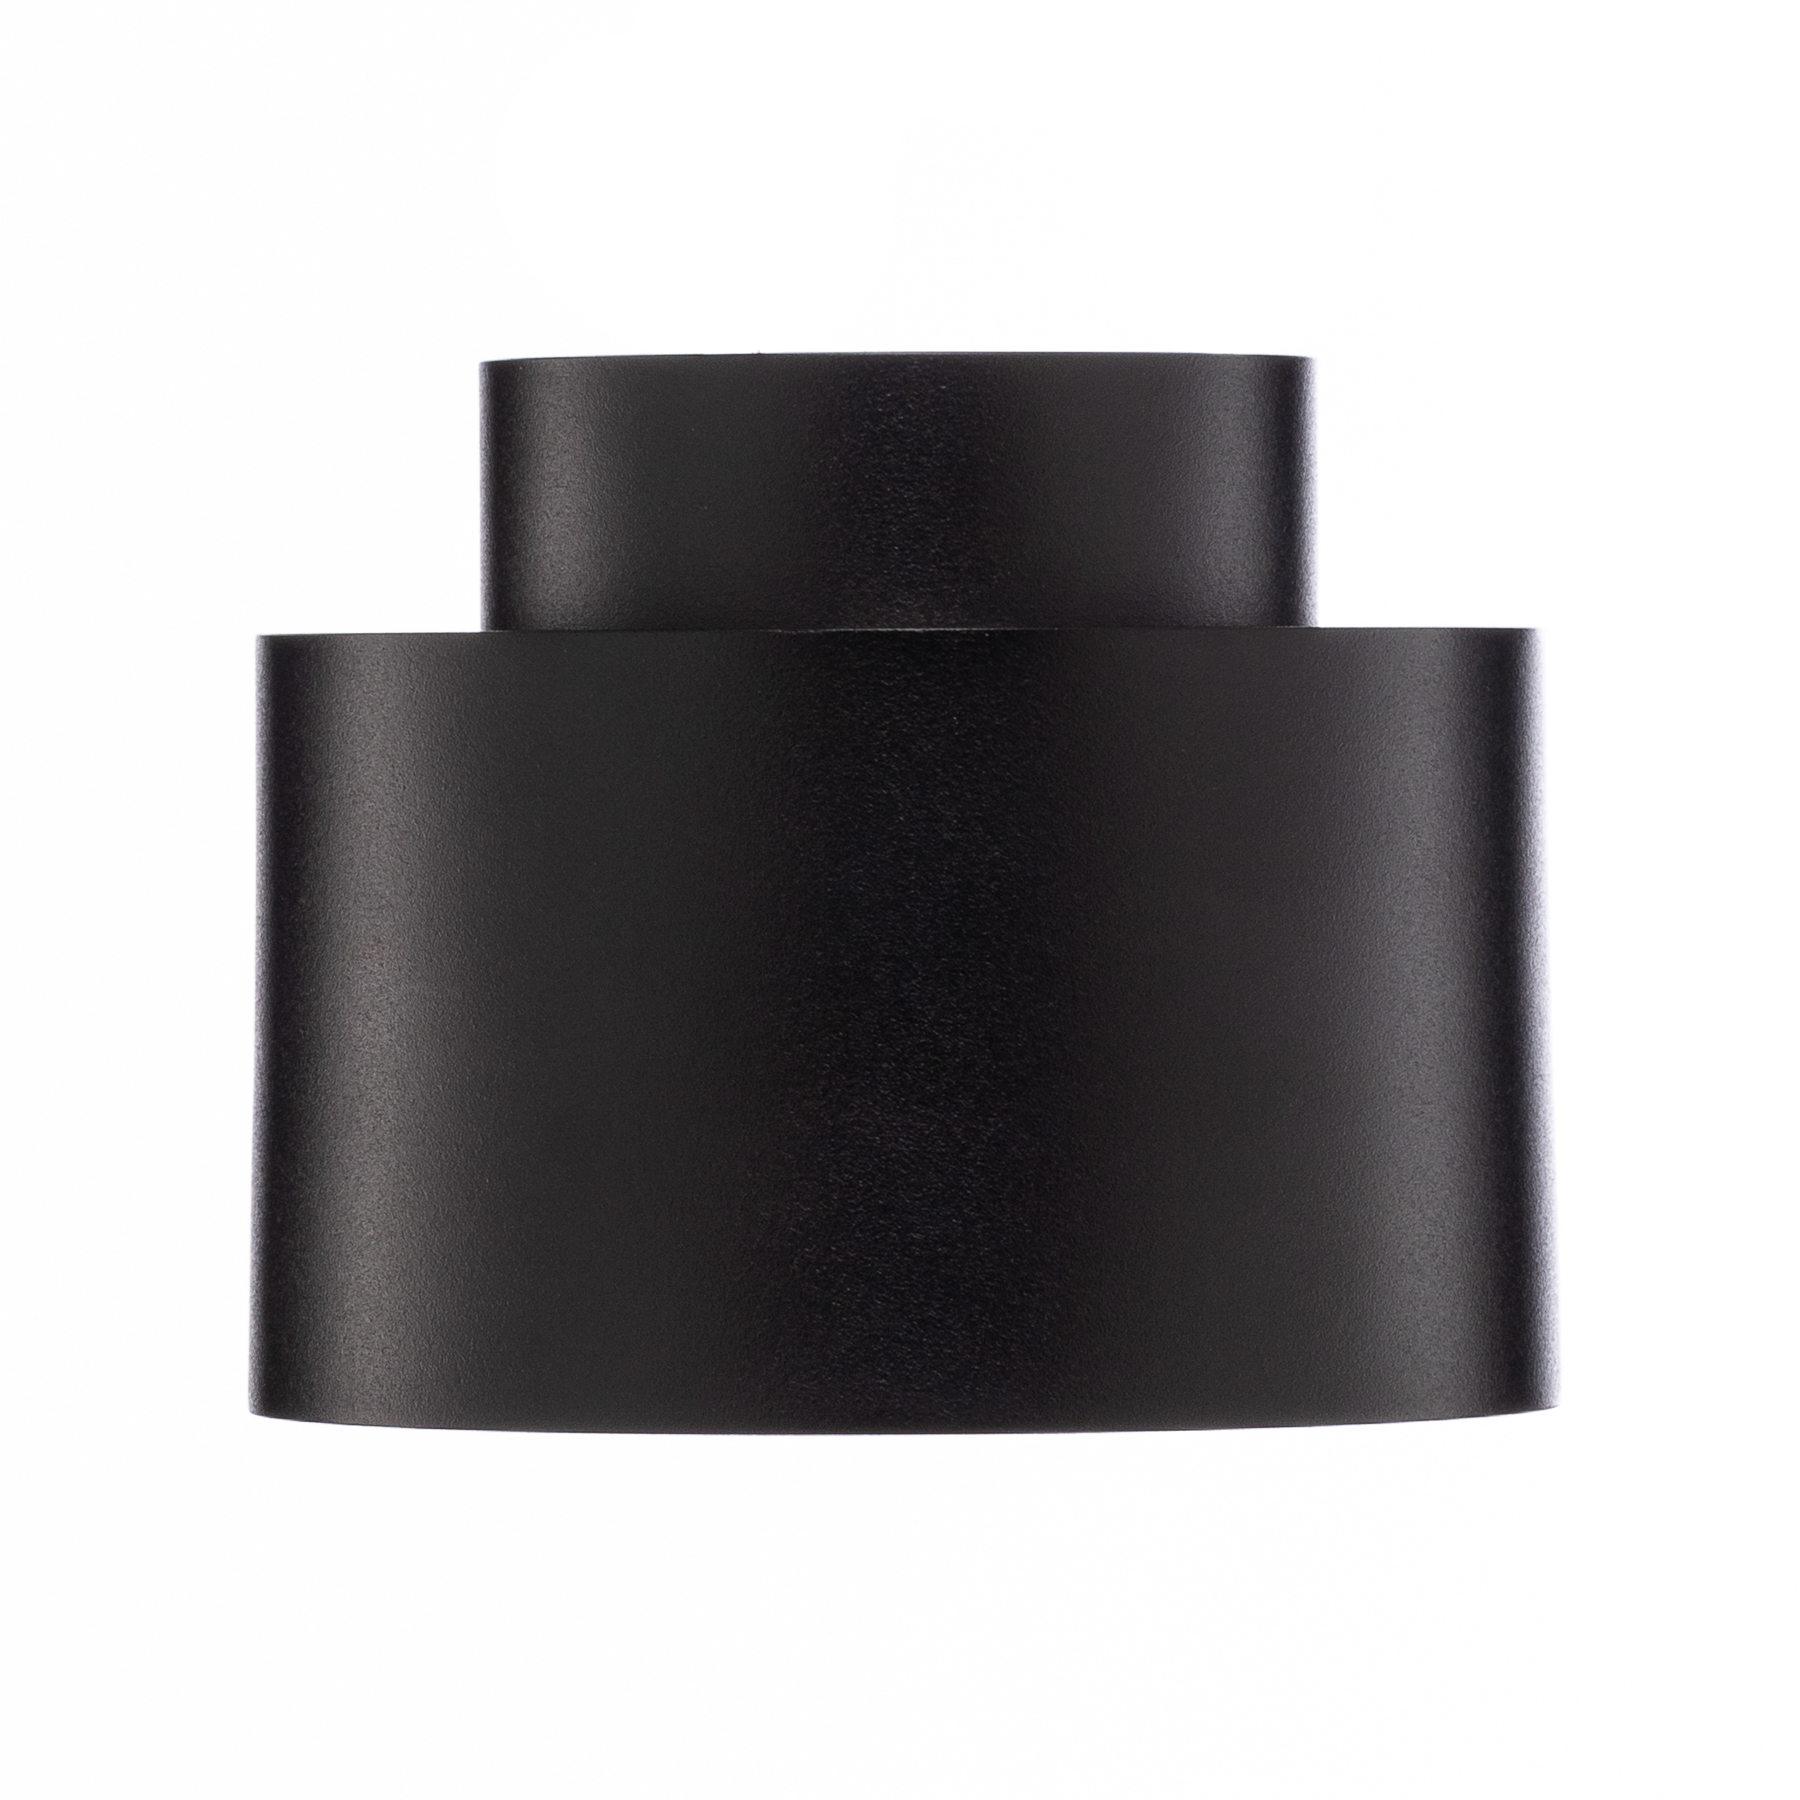 Lindby LED spotlight Nivoria, Ø 11 cm, sand black, set of 4